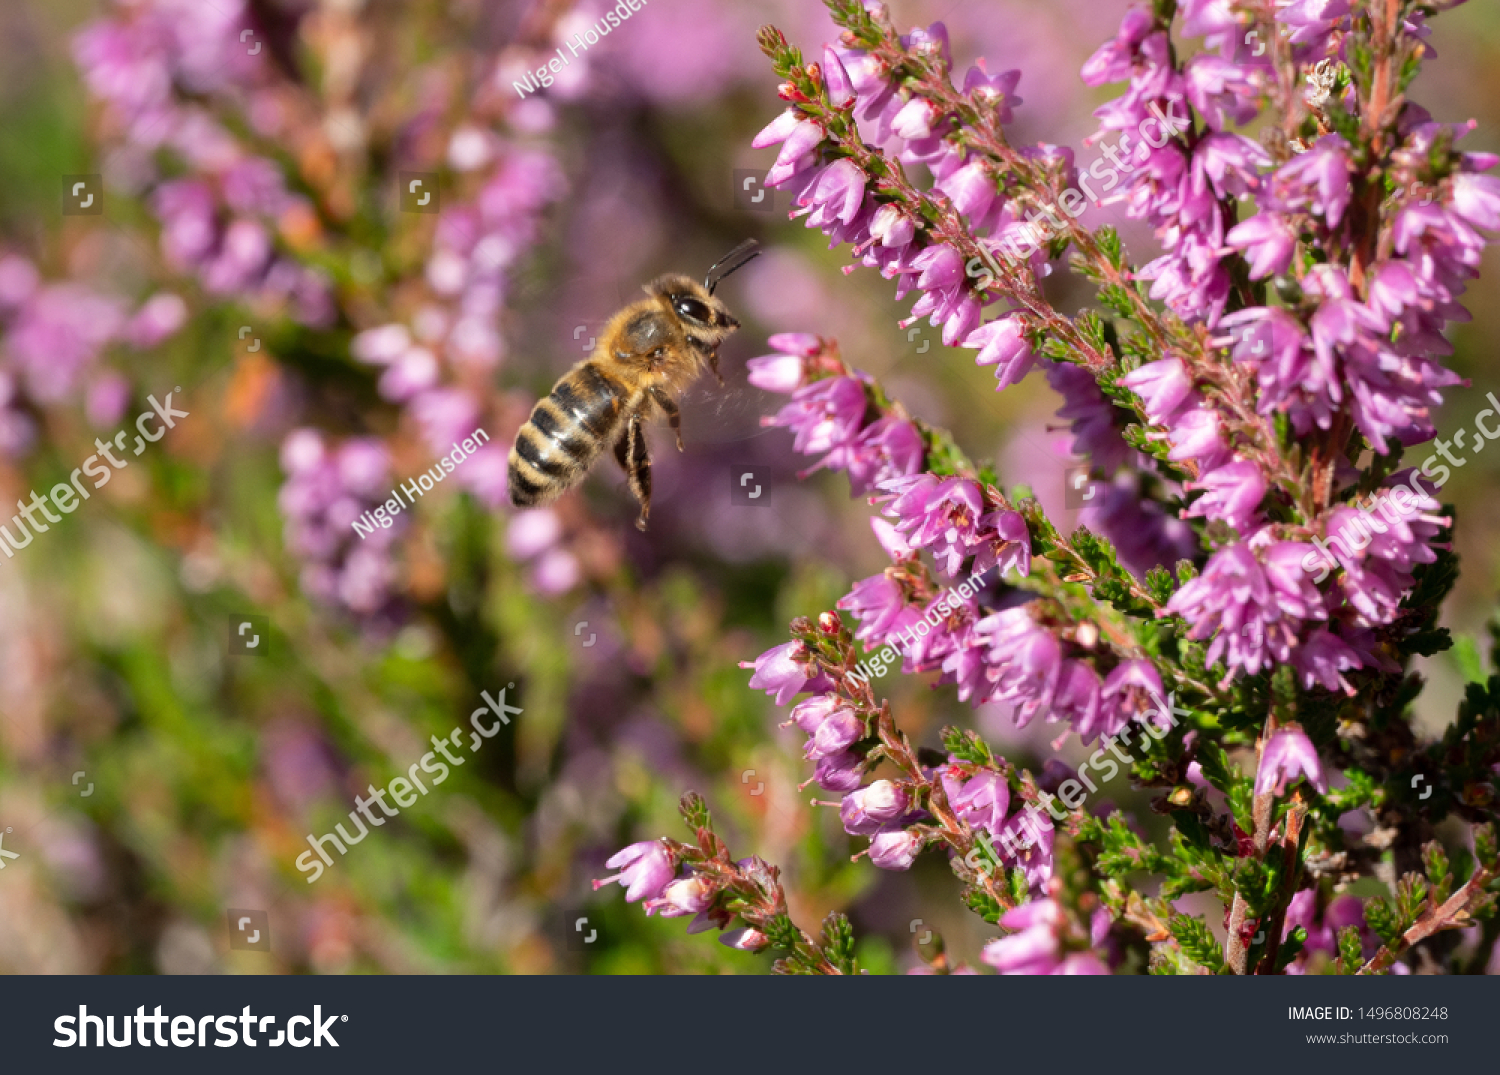 Bee flying towards heather flowers #1496808248